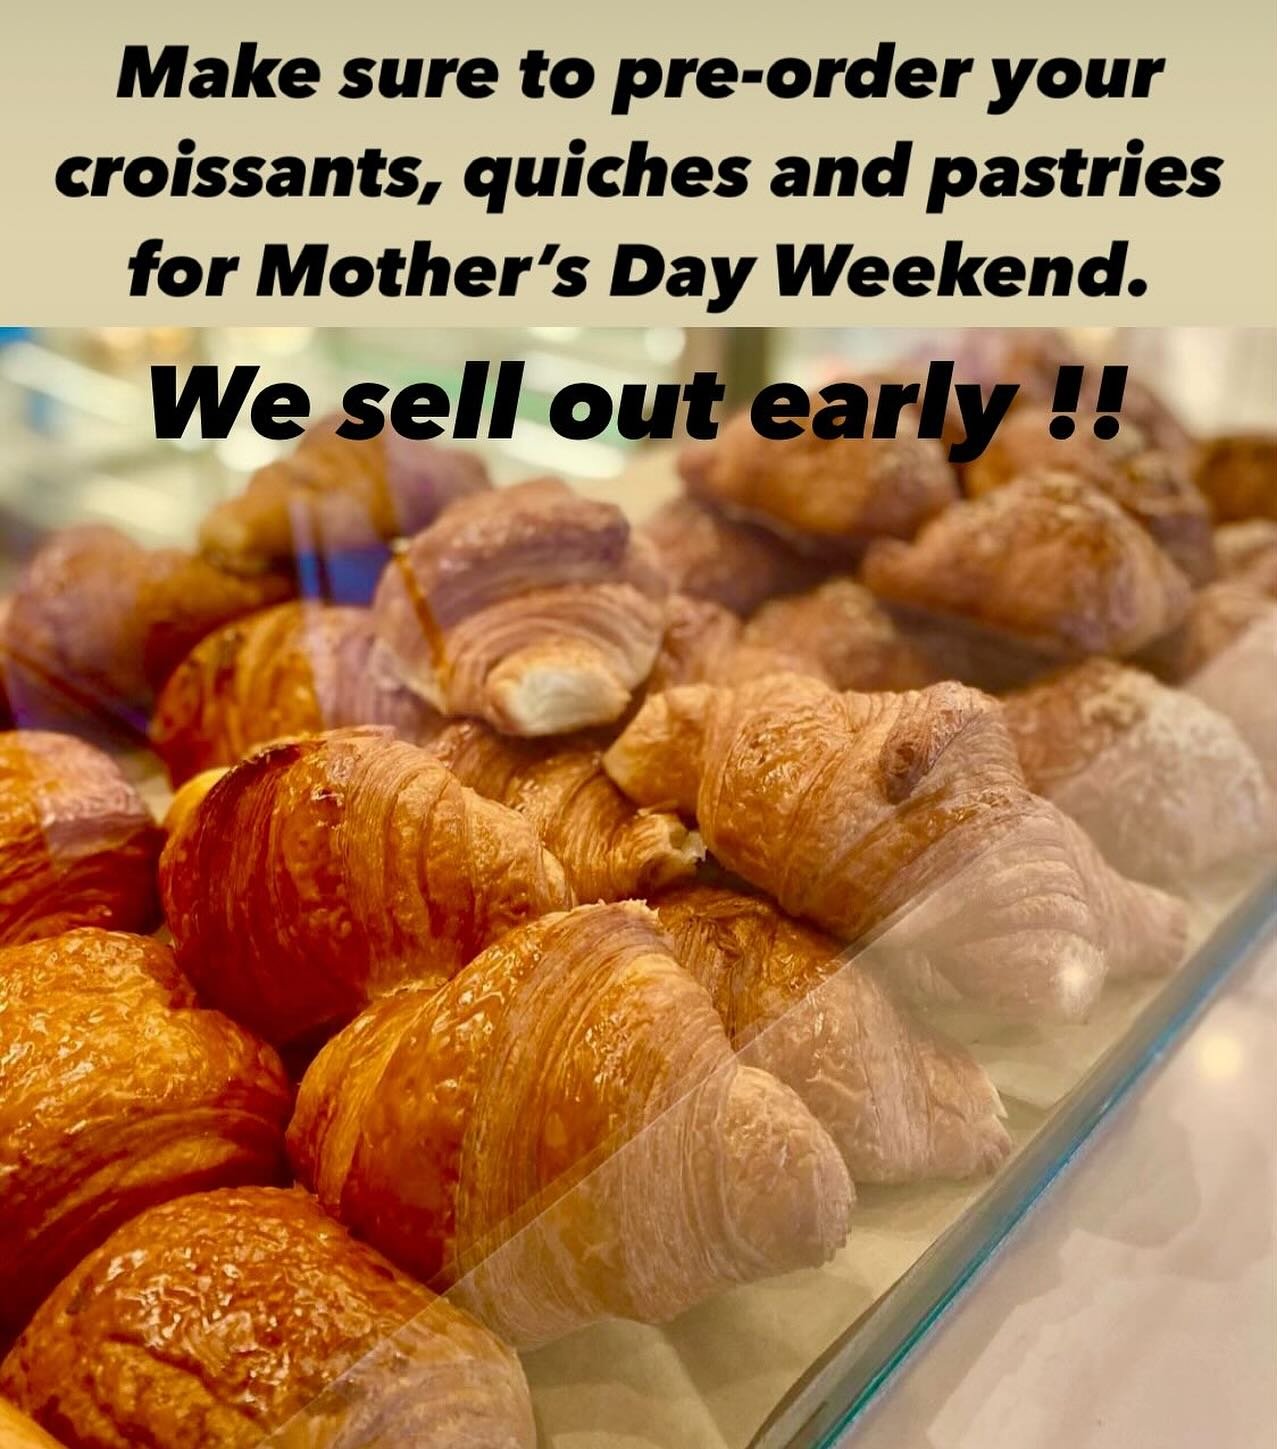 #croissant #frenchpastry #mothersday #breakfast #quiche #chathamnj #madisonnj #summitnj #shorthills #florhampark #frenchbakery